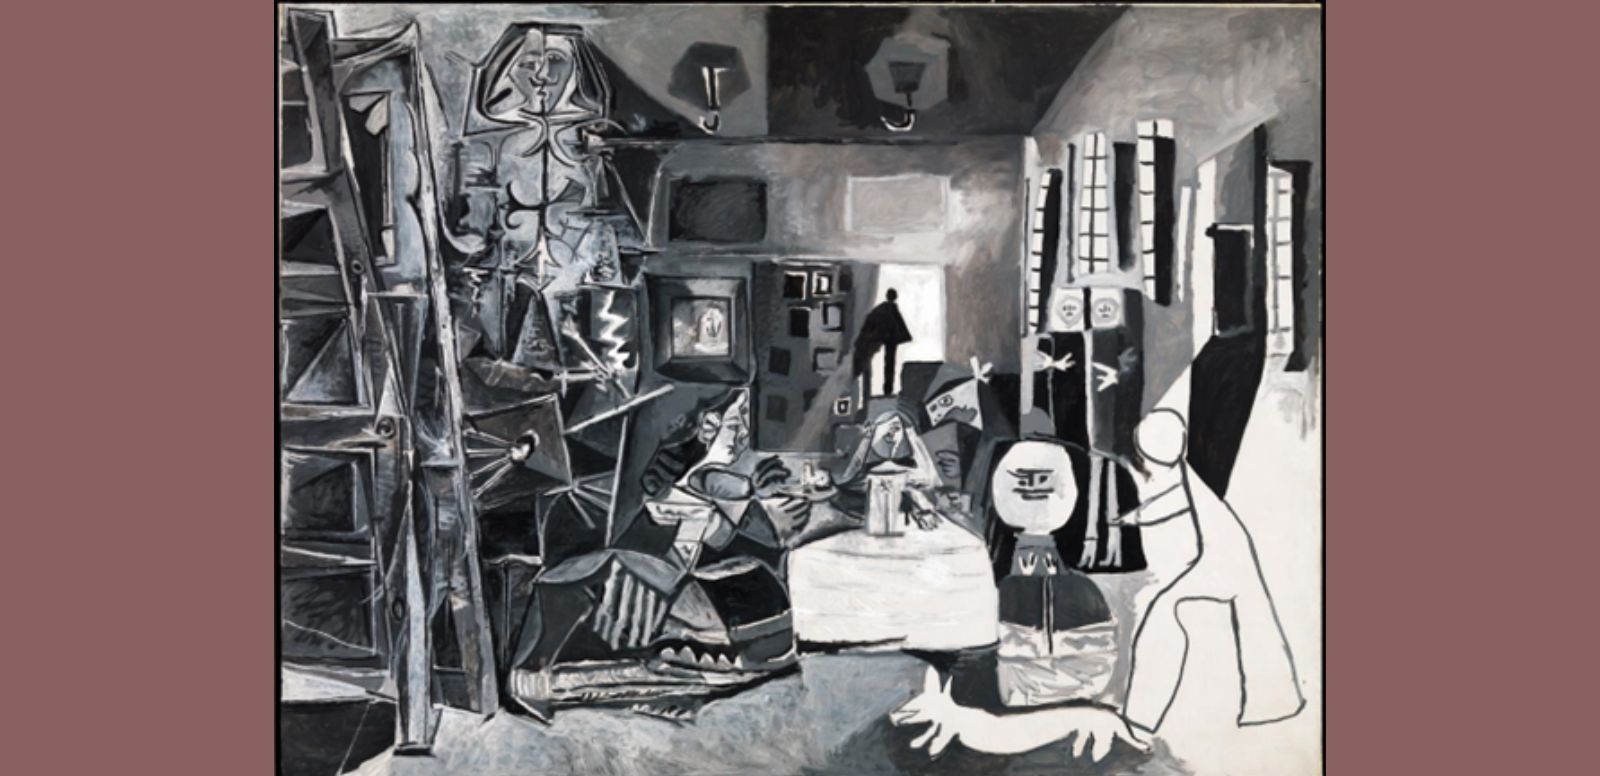 Pablo Picasso, “Las Meninas”, 1957